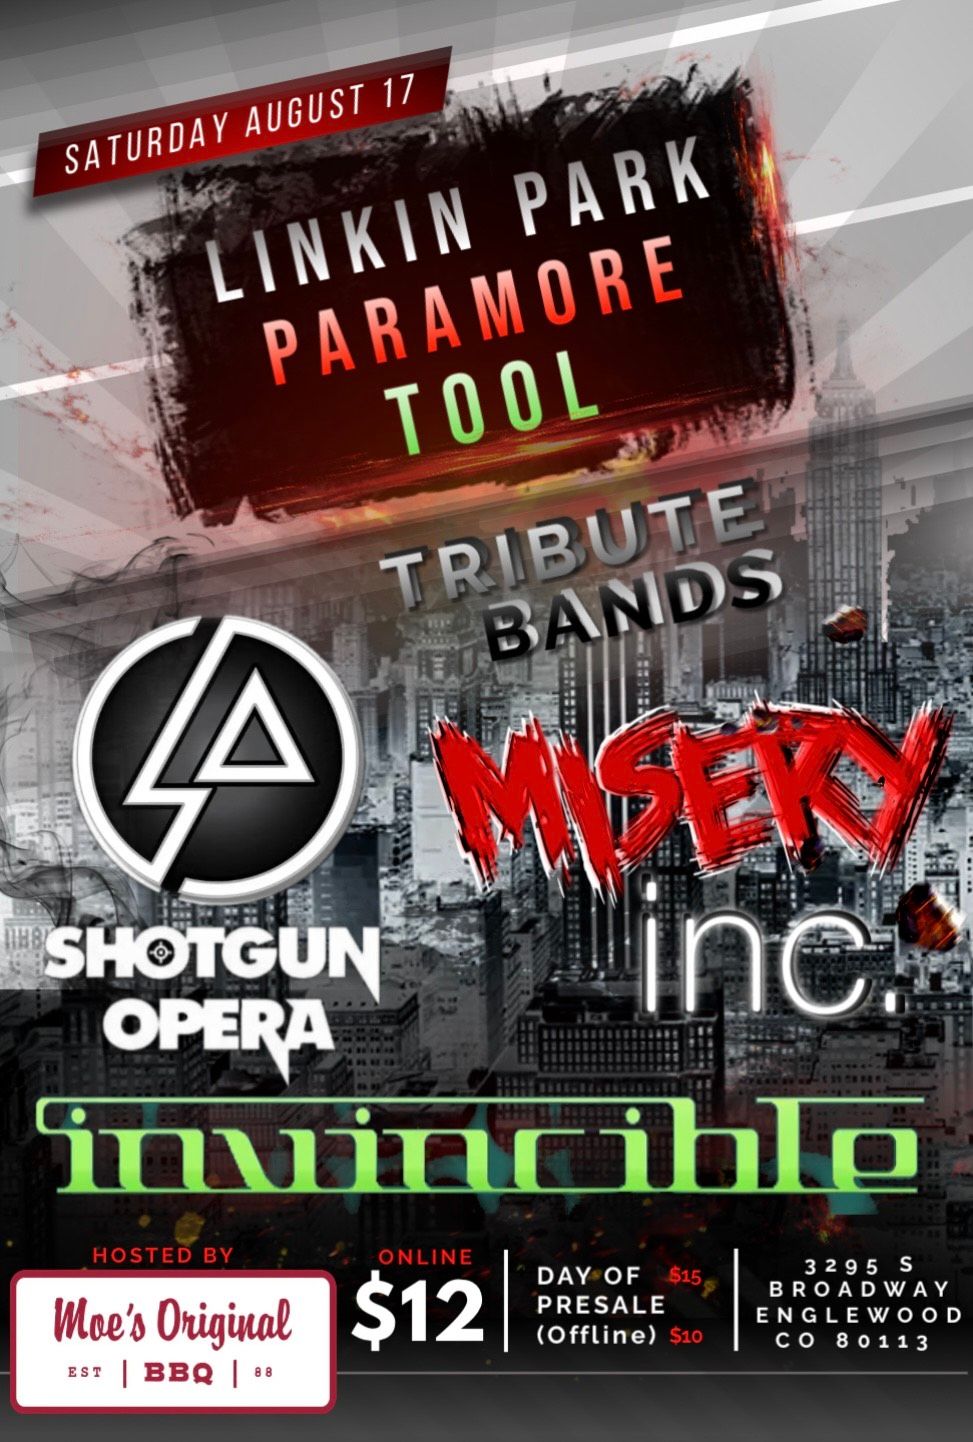 Shotgun Opera + Misery Inc + Invincible